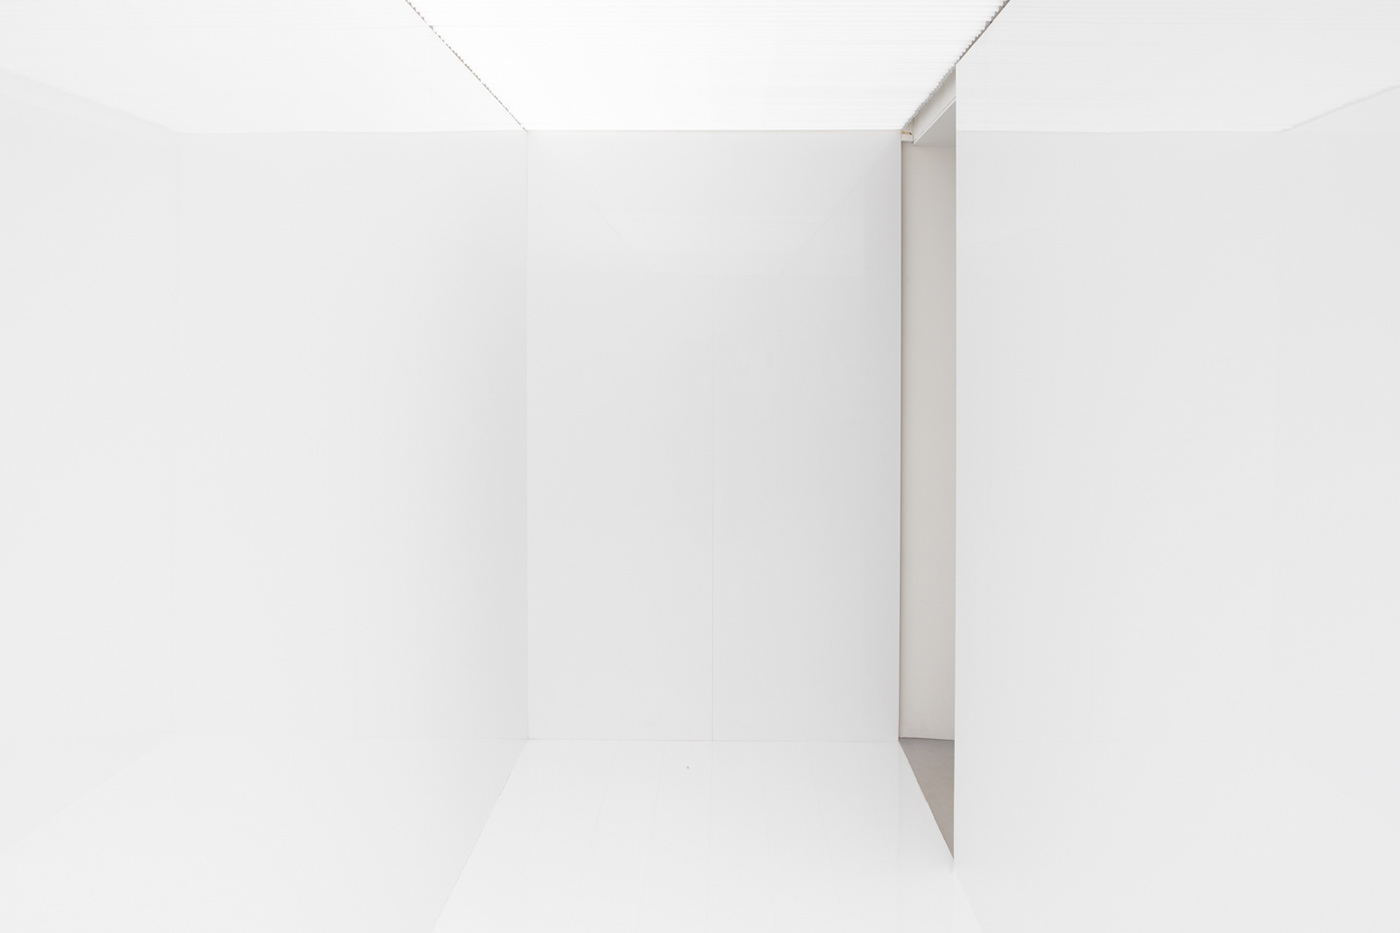 Dario Ruggiero Ryoji Ikeda spectre iii biennale 2019 art architecture installation